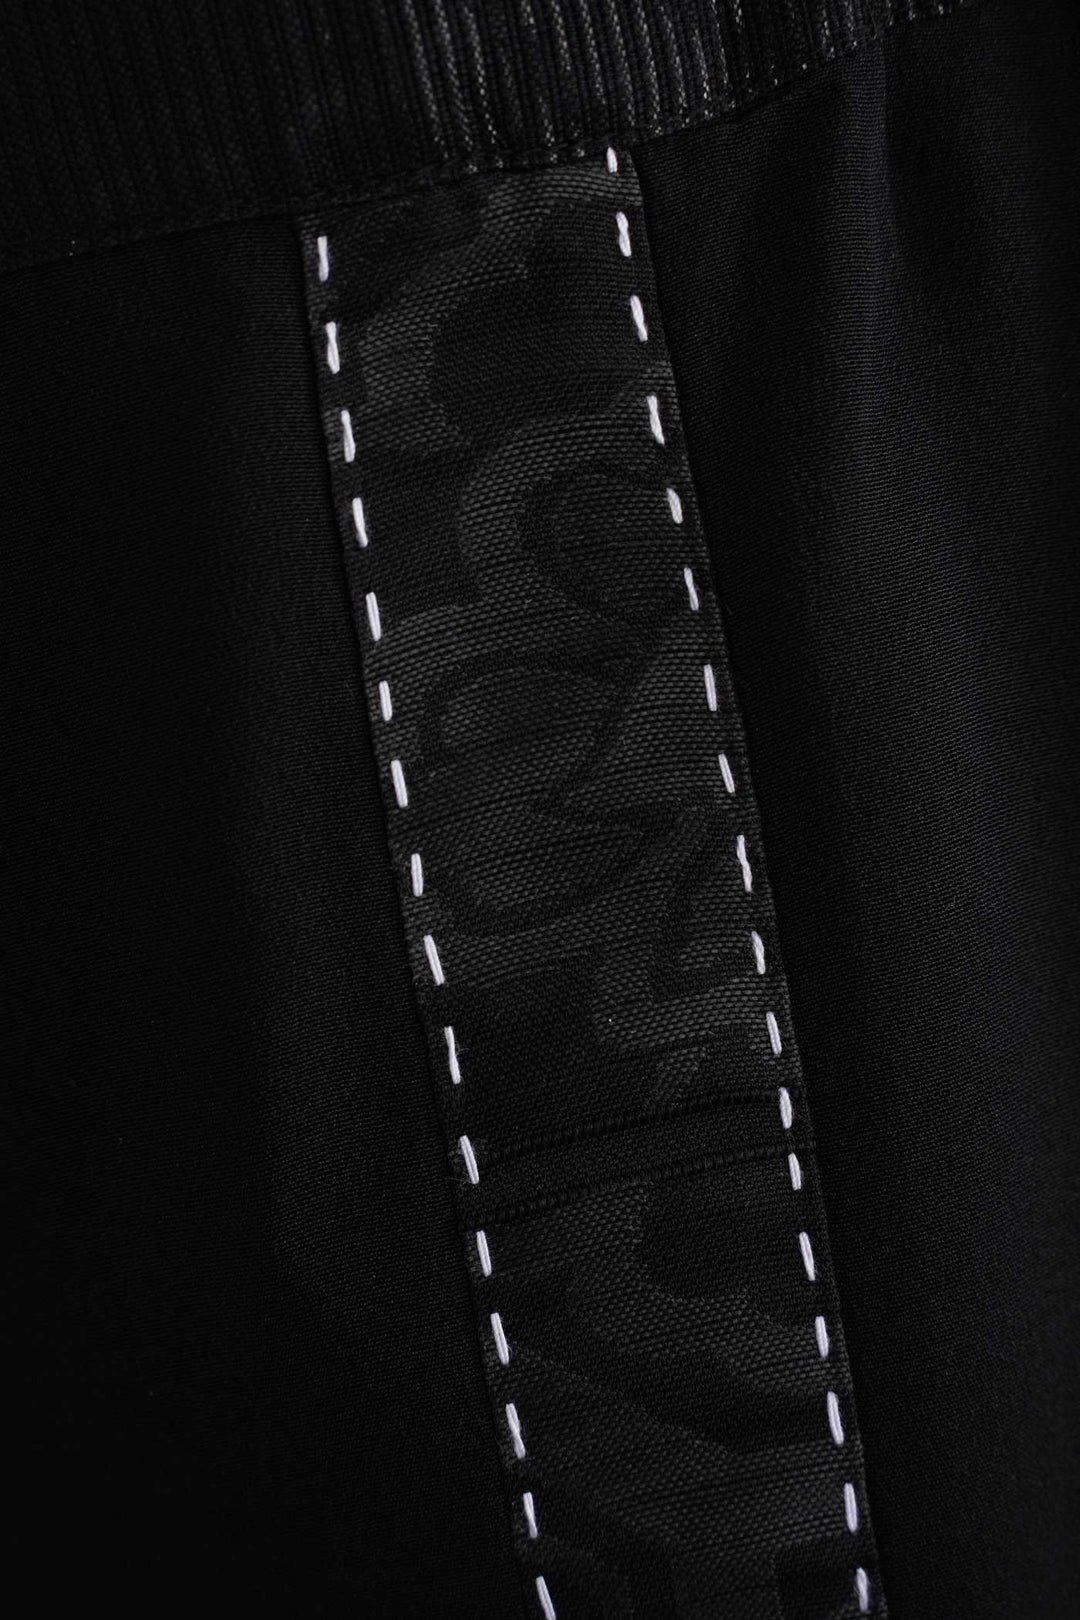 Black Silk Straight Pants with Brocade-Obi and Sashiko Stitching Details